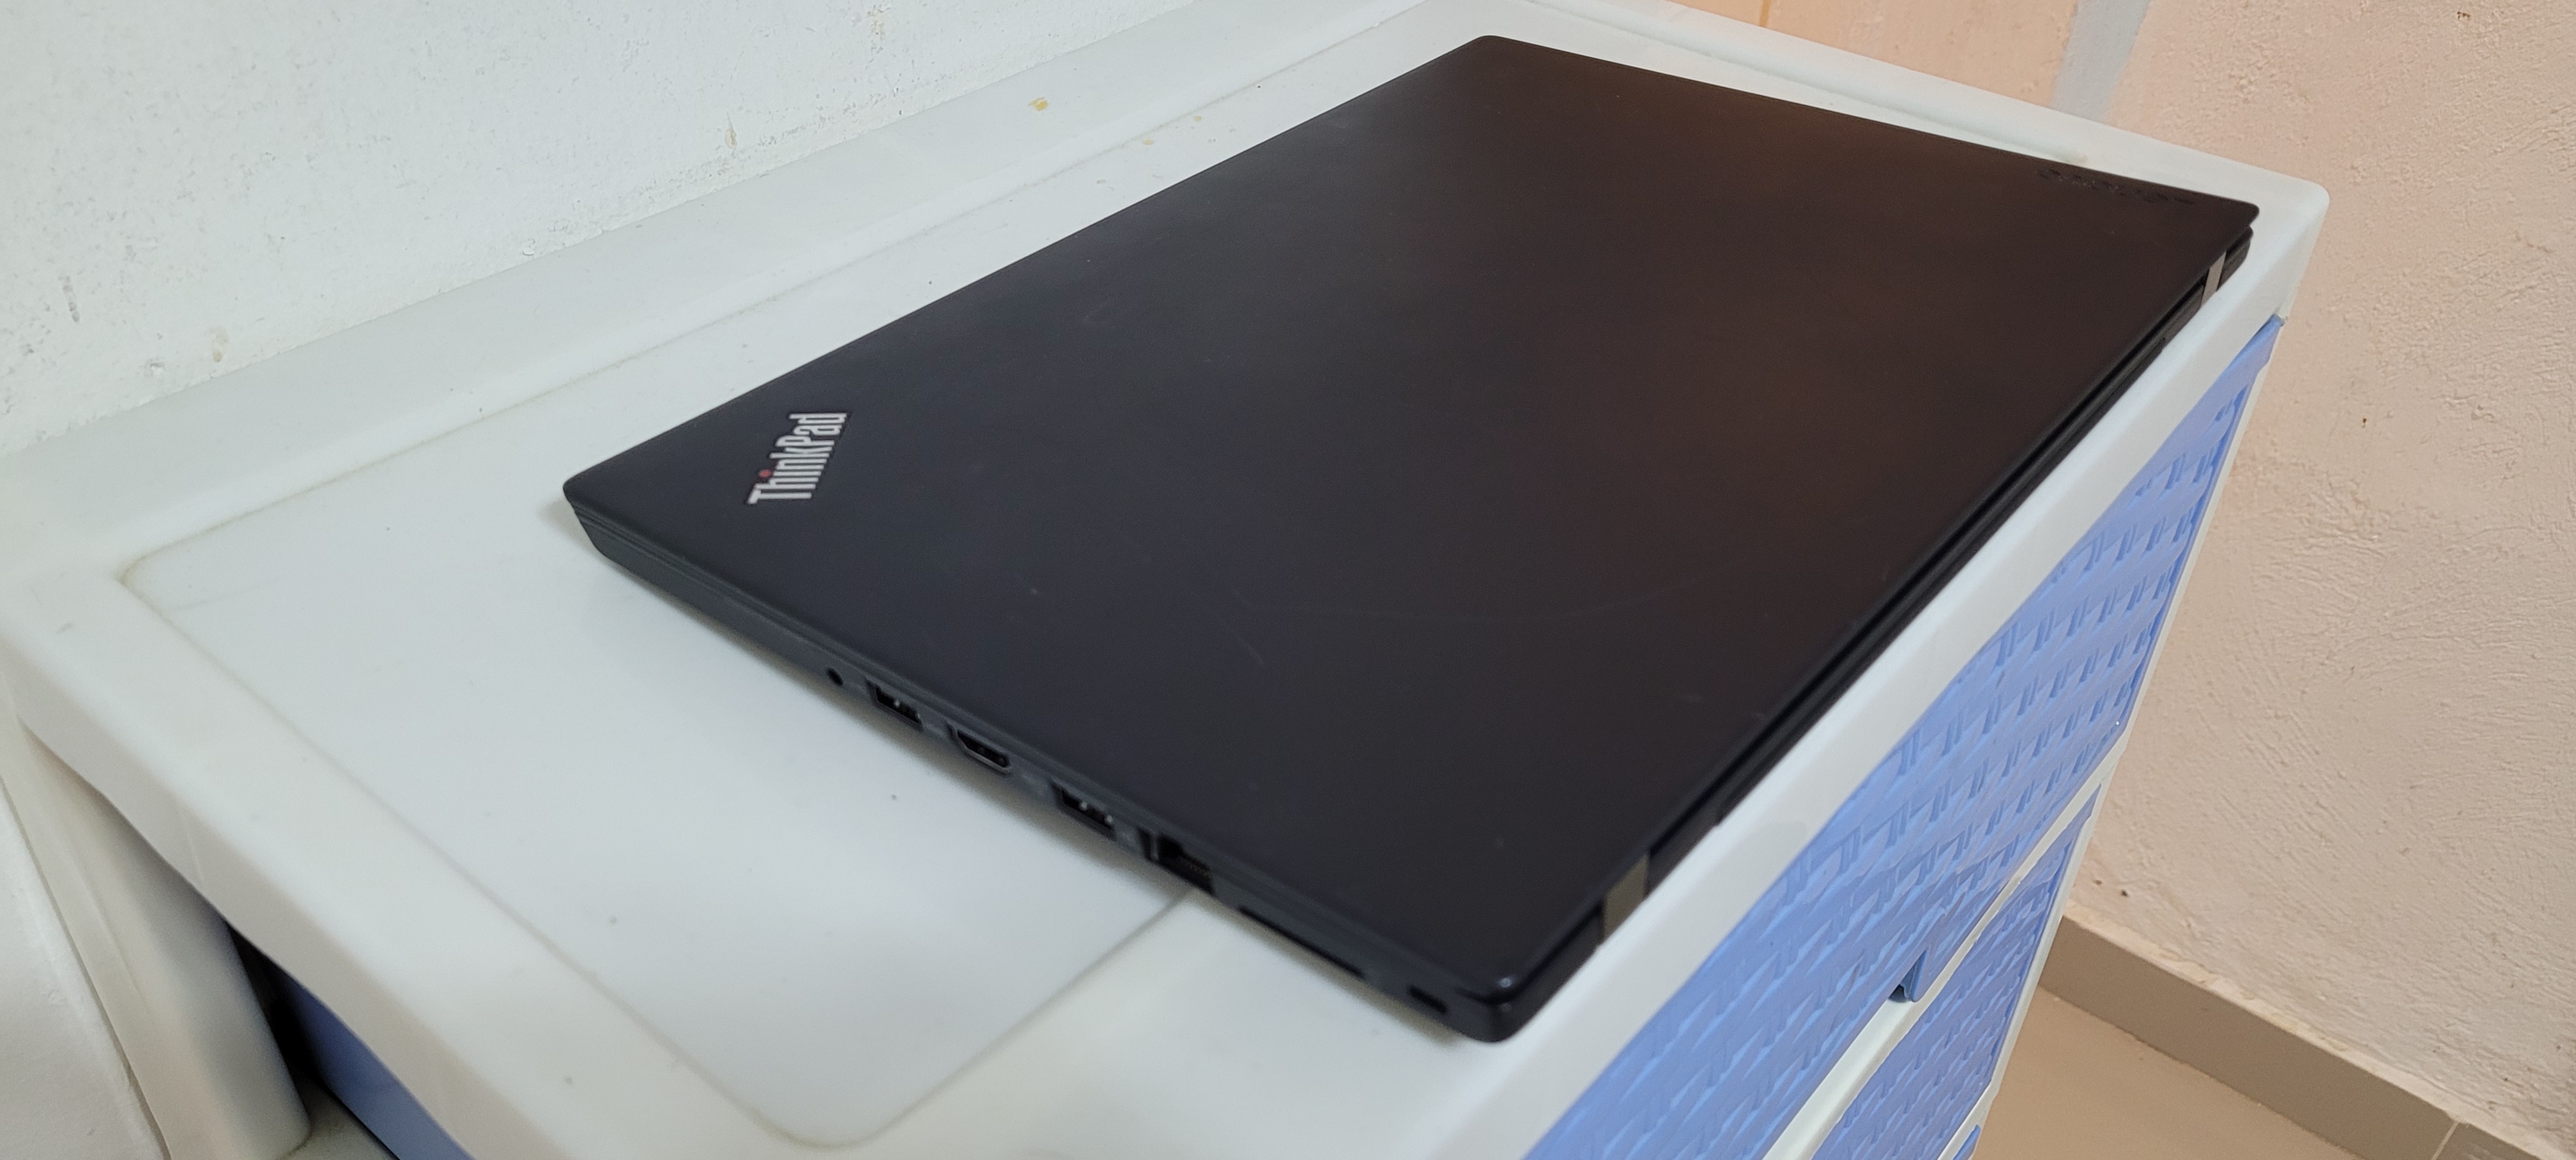 computadoras y laptops - Lenovo Slim 450 14 Pulg Core i7 Ram 8gb Disco 256gb SSD Solido New 2